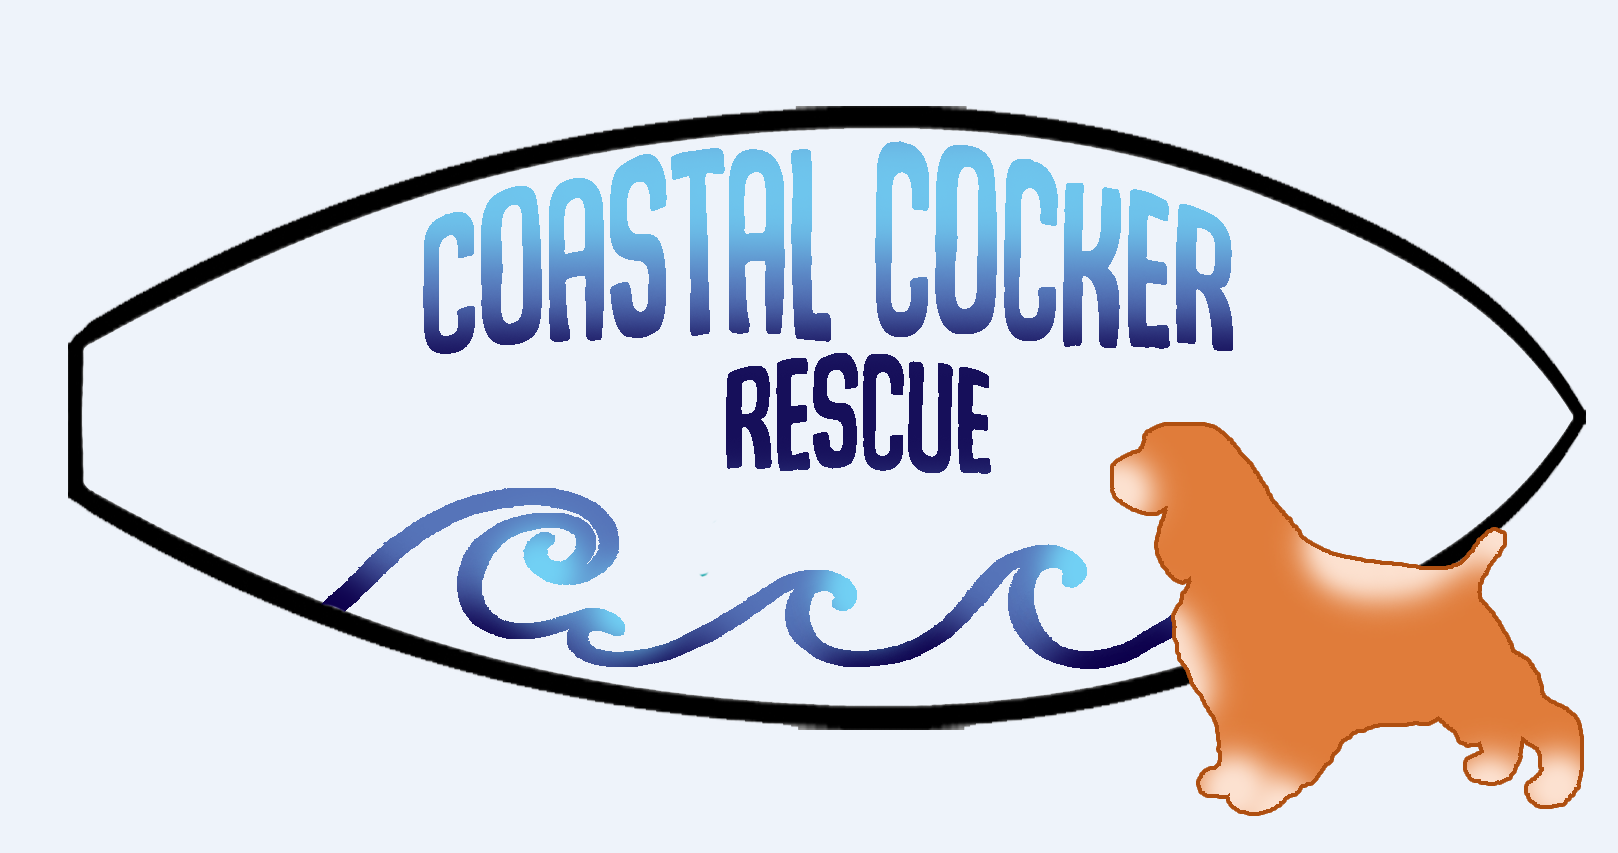 Florida Coastal Cocker Rescue